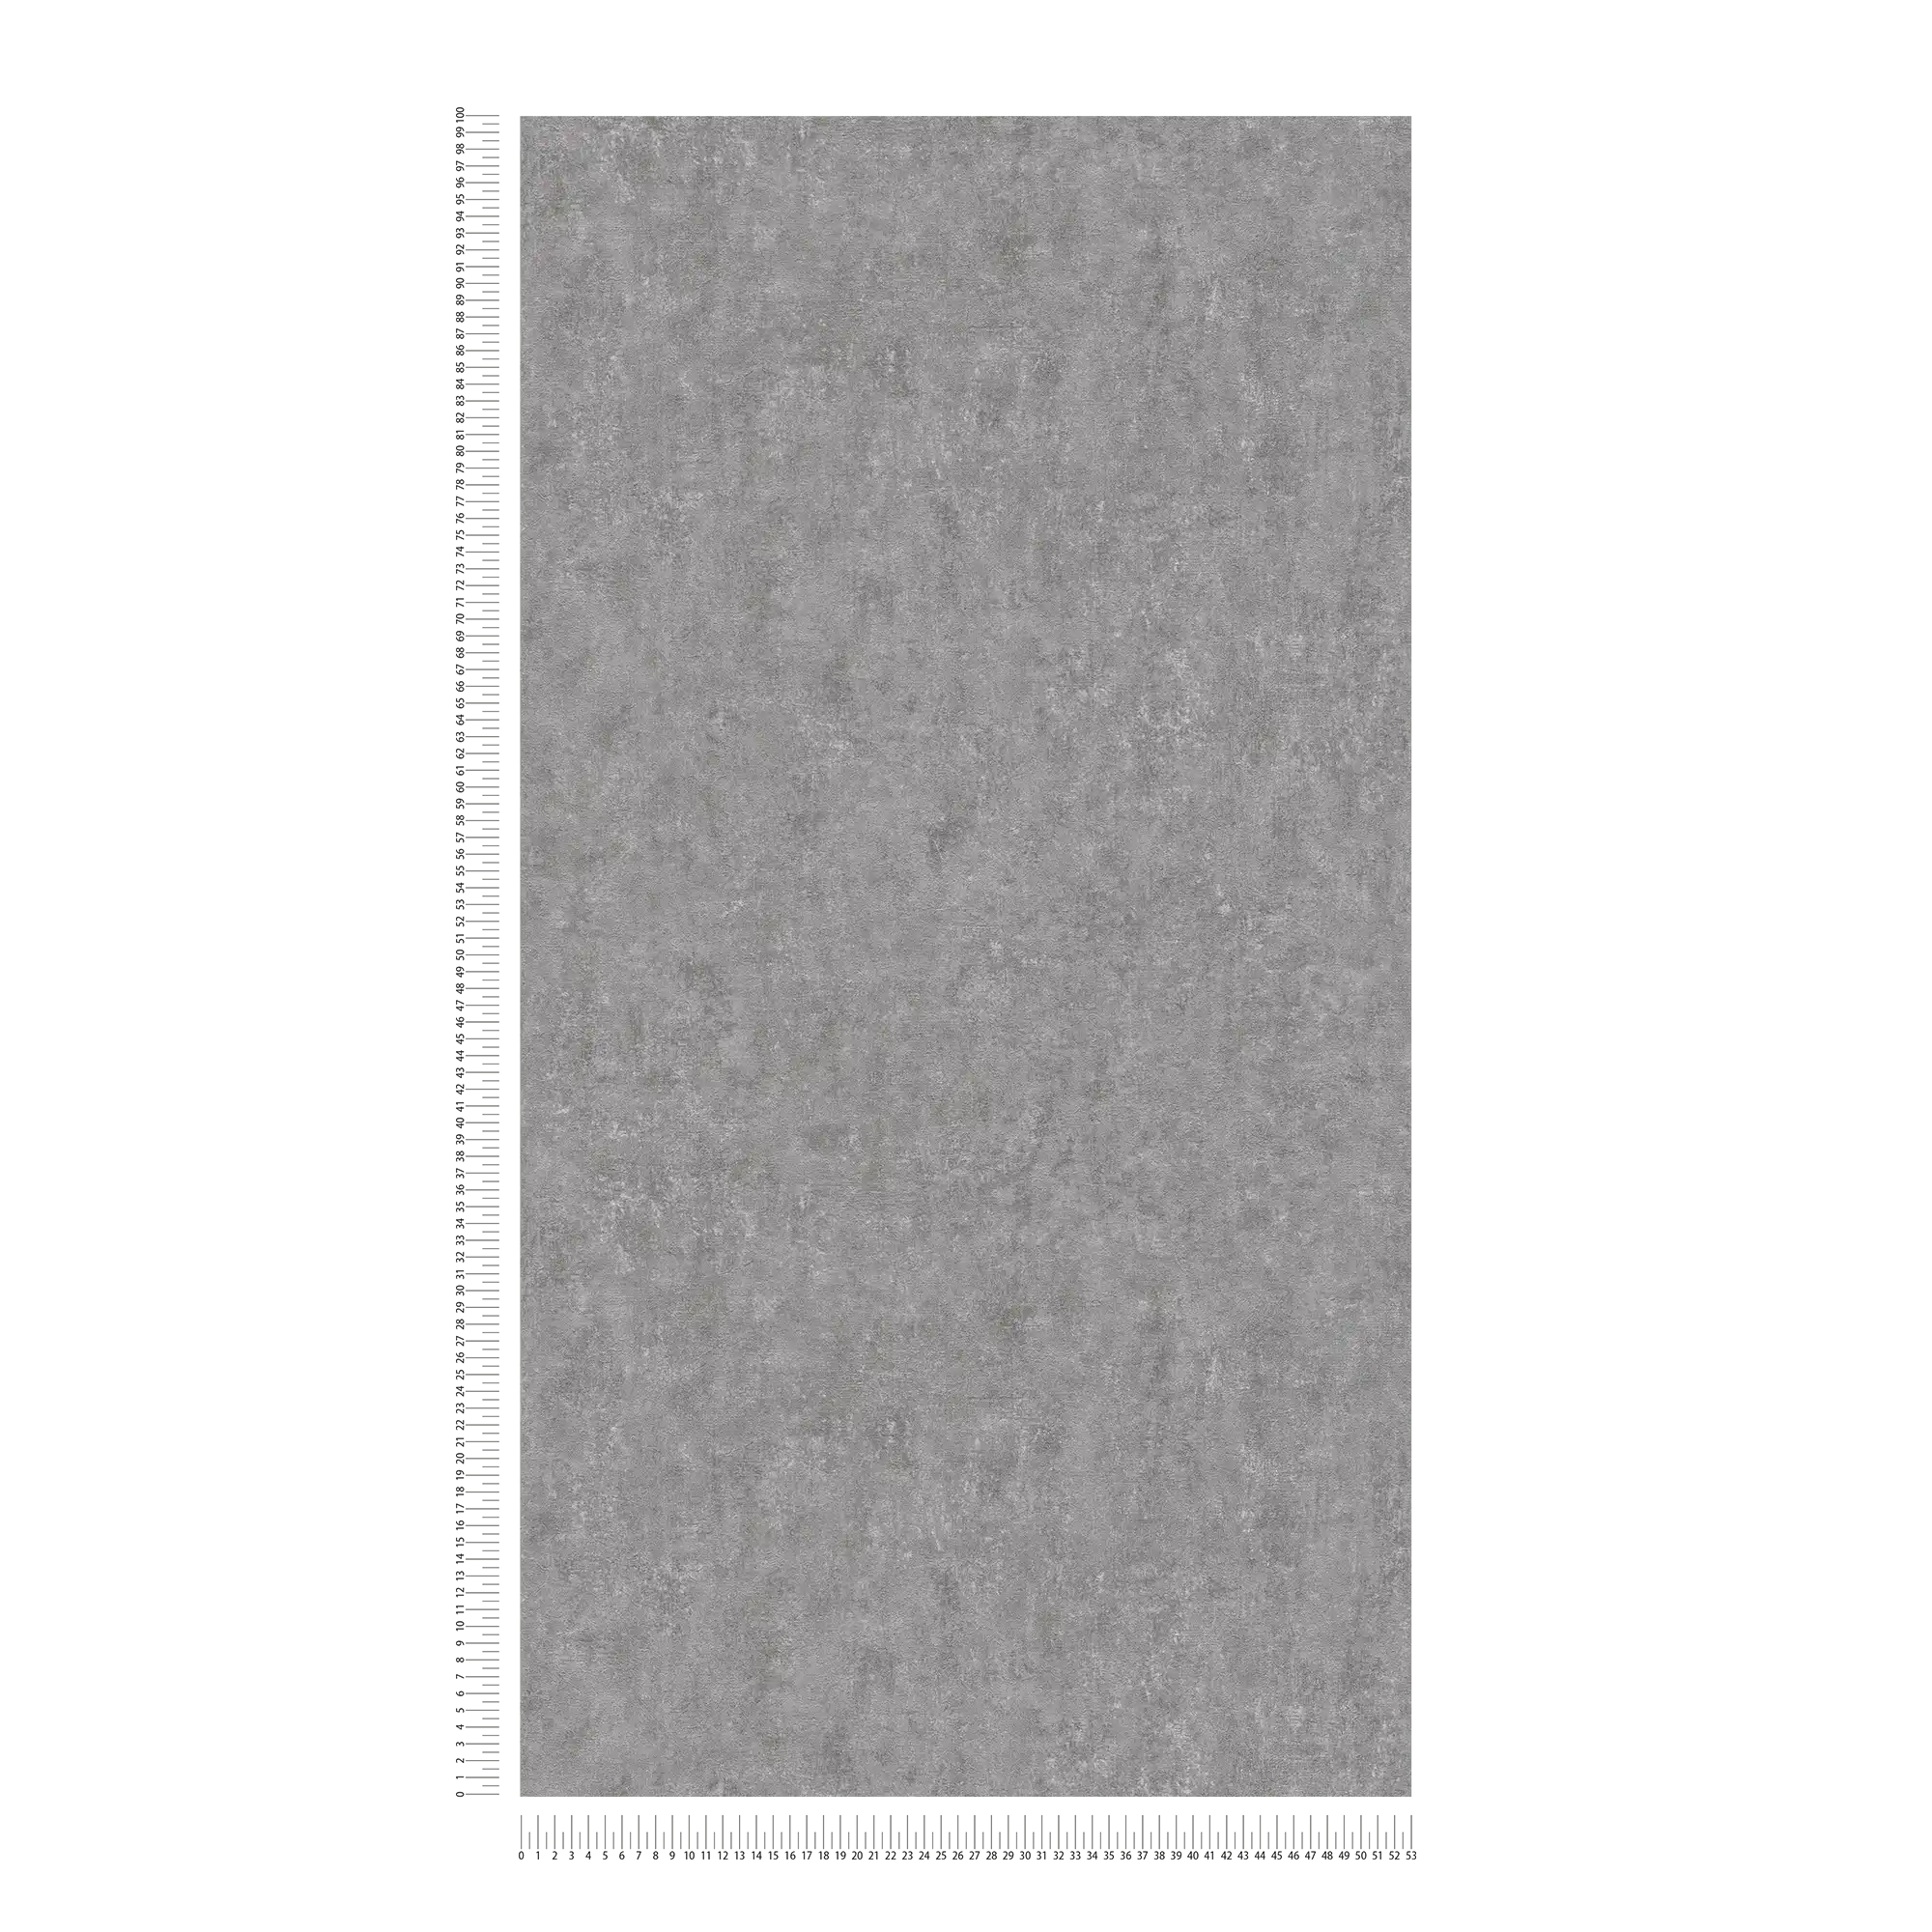             Non-woven wallpaper concrete structure grey mottled
        